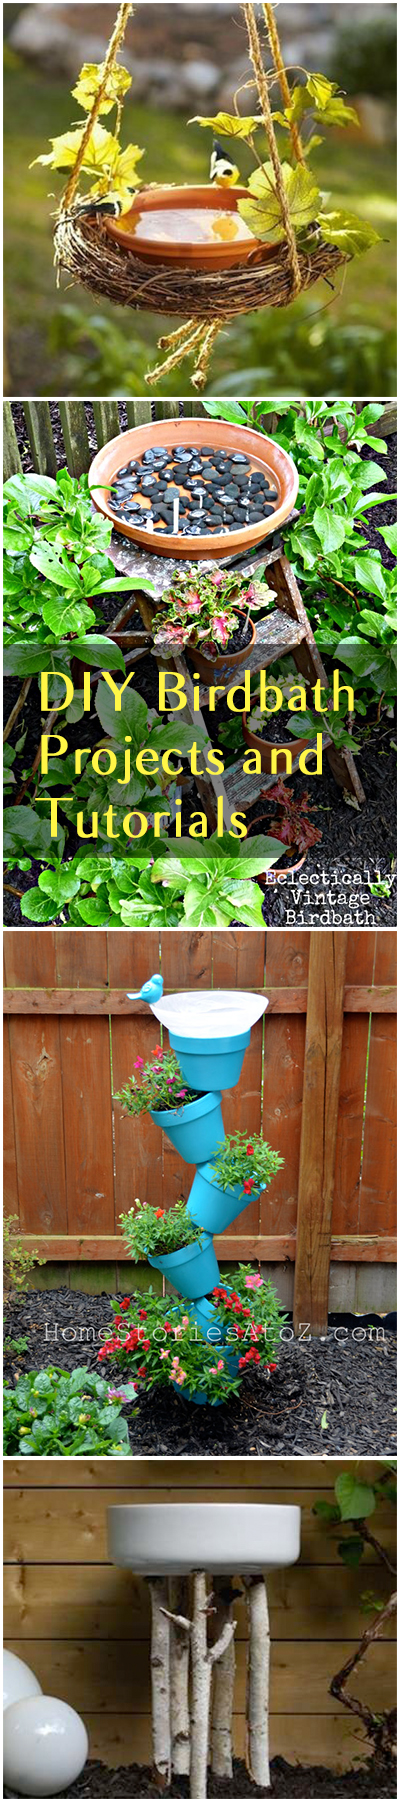 DIY Birdbath Projects and Tutorials